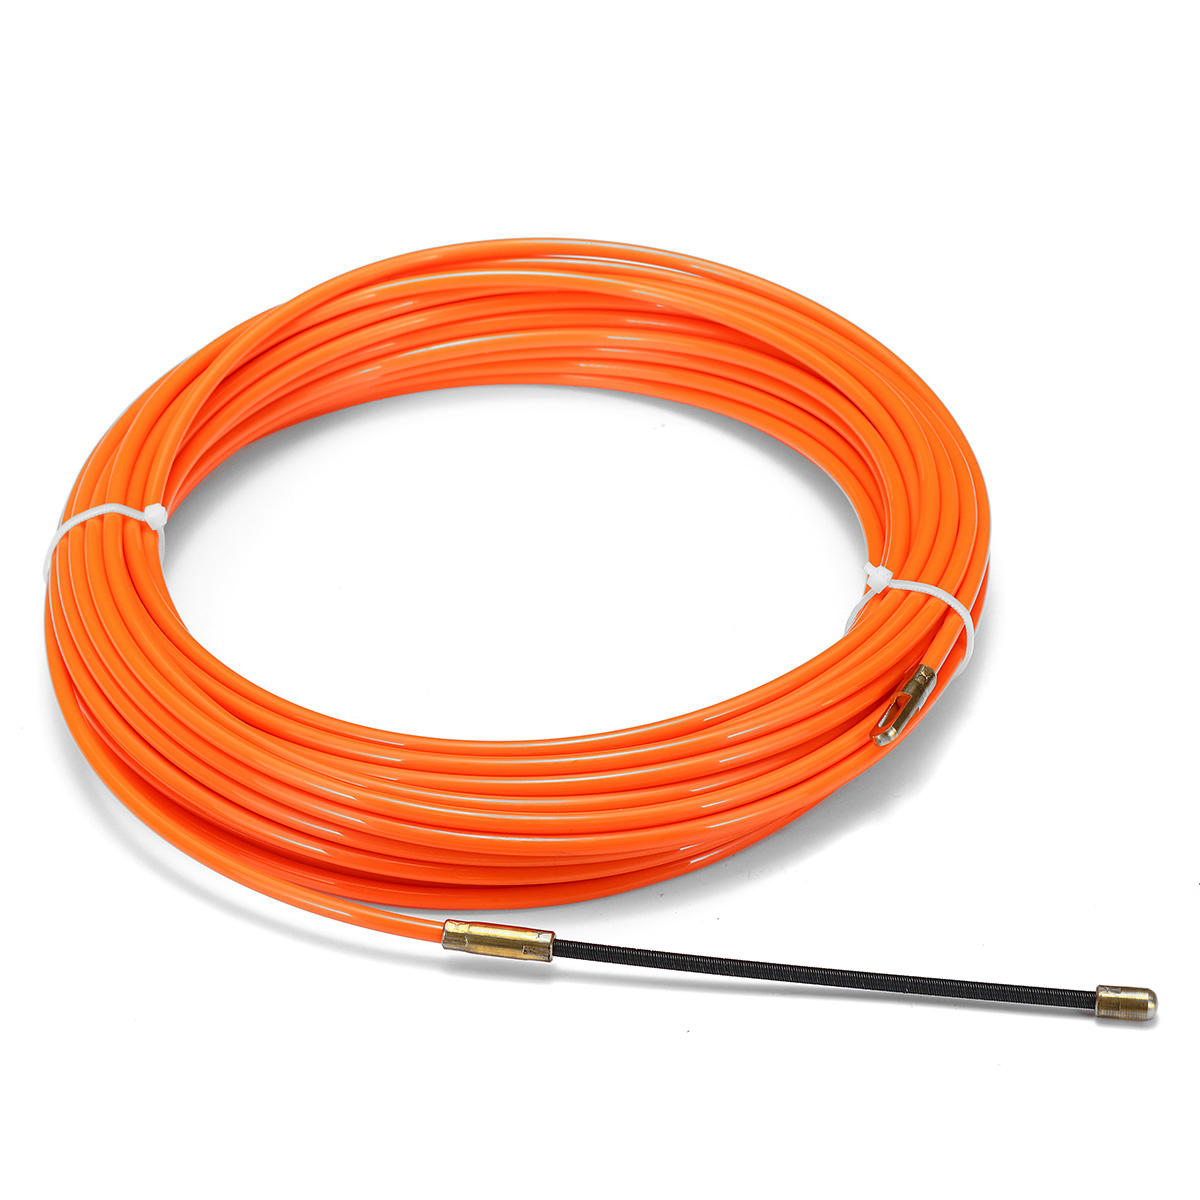 Kabel duwdraaischijf ringleiding Nylon Snake vis tape draad oranje 4mm 15m